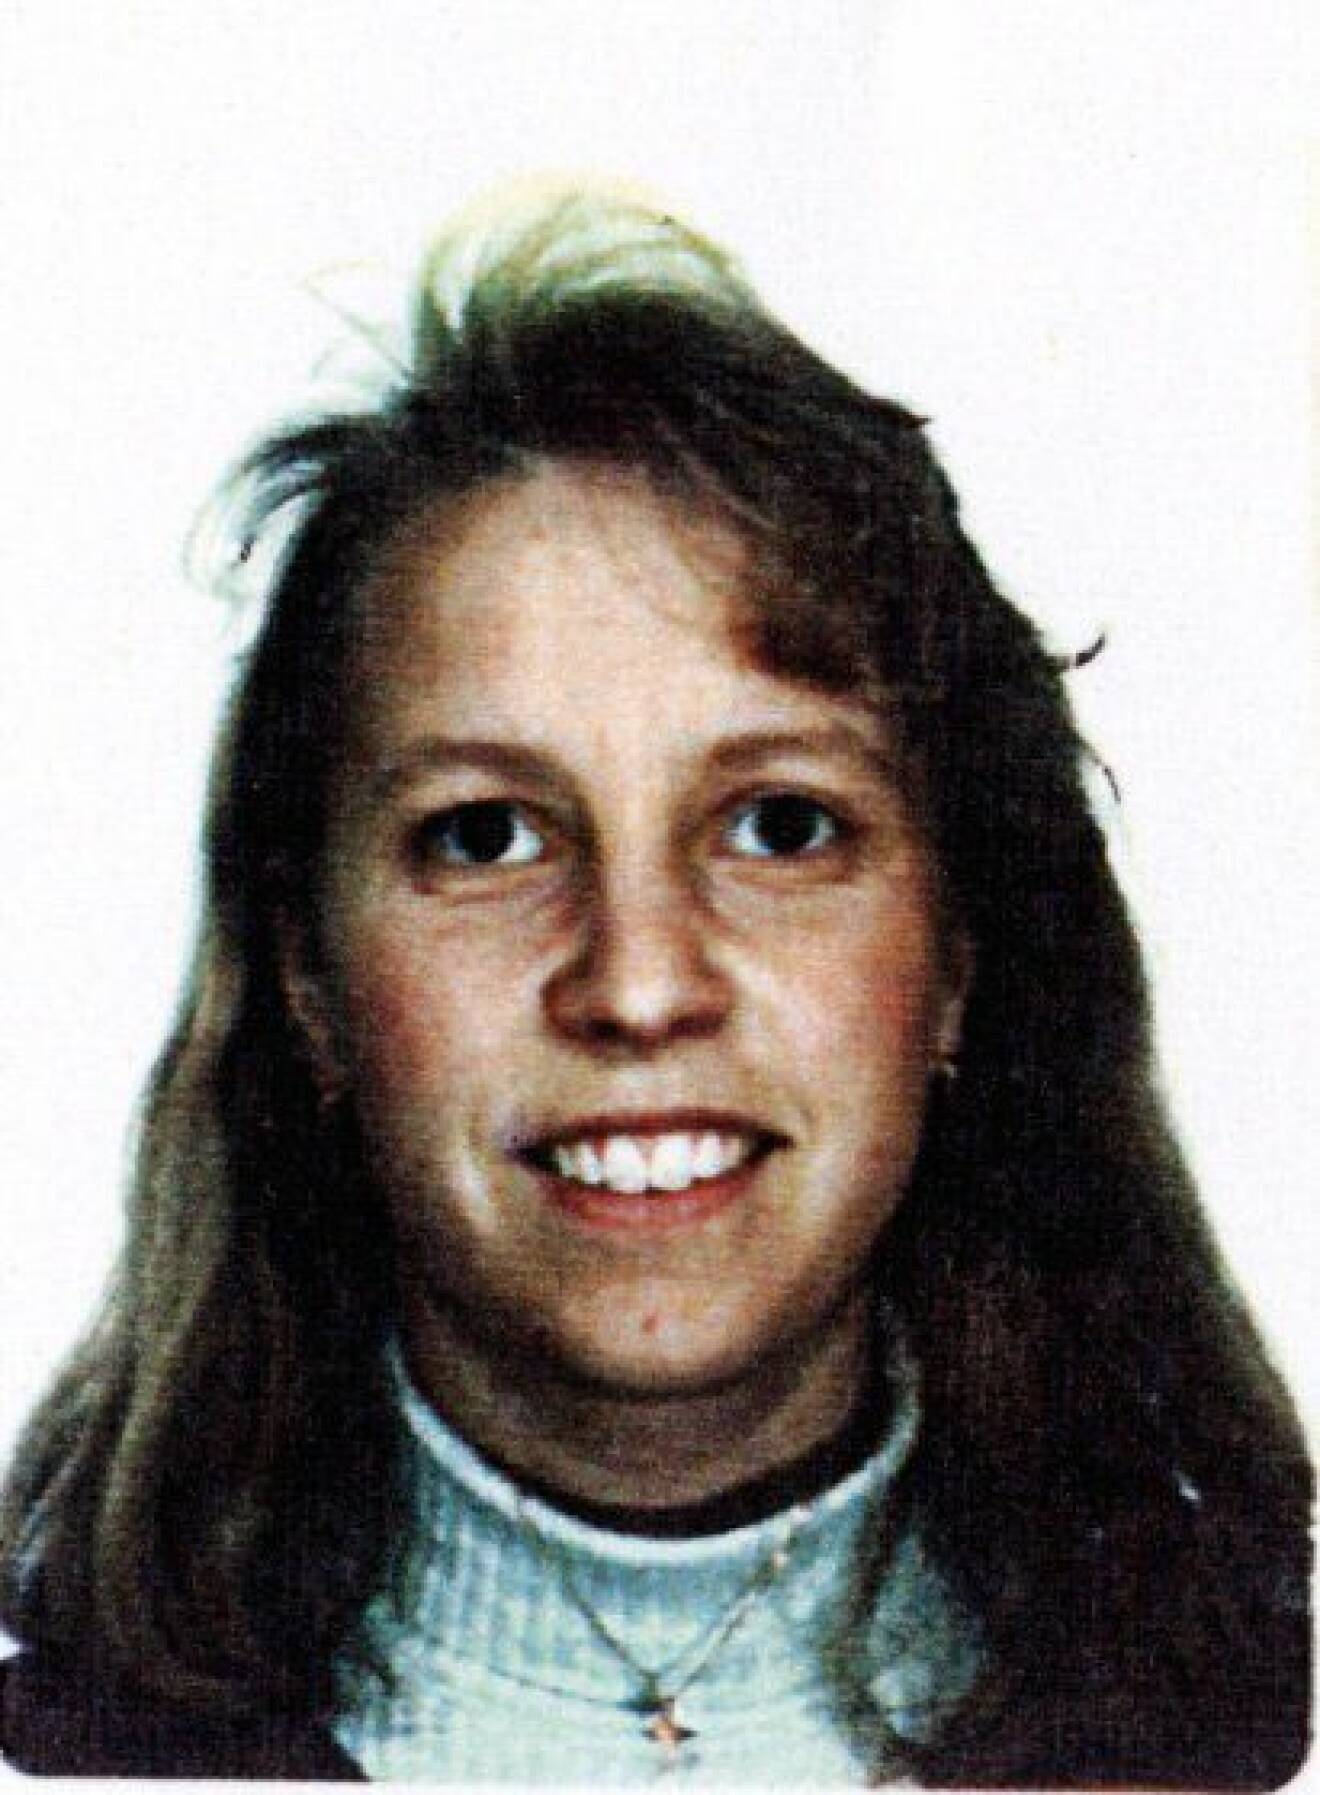 Heléne Fossmo hittades död i badkaret i Knutby